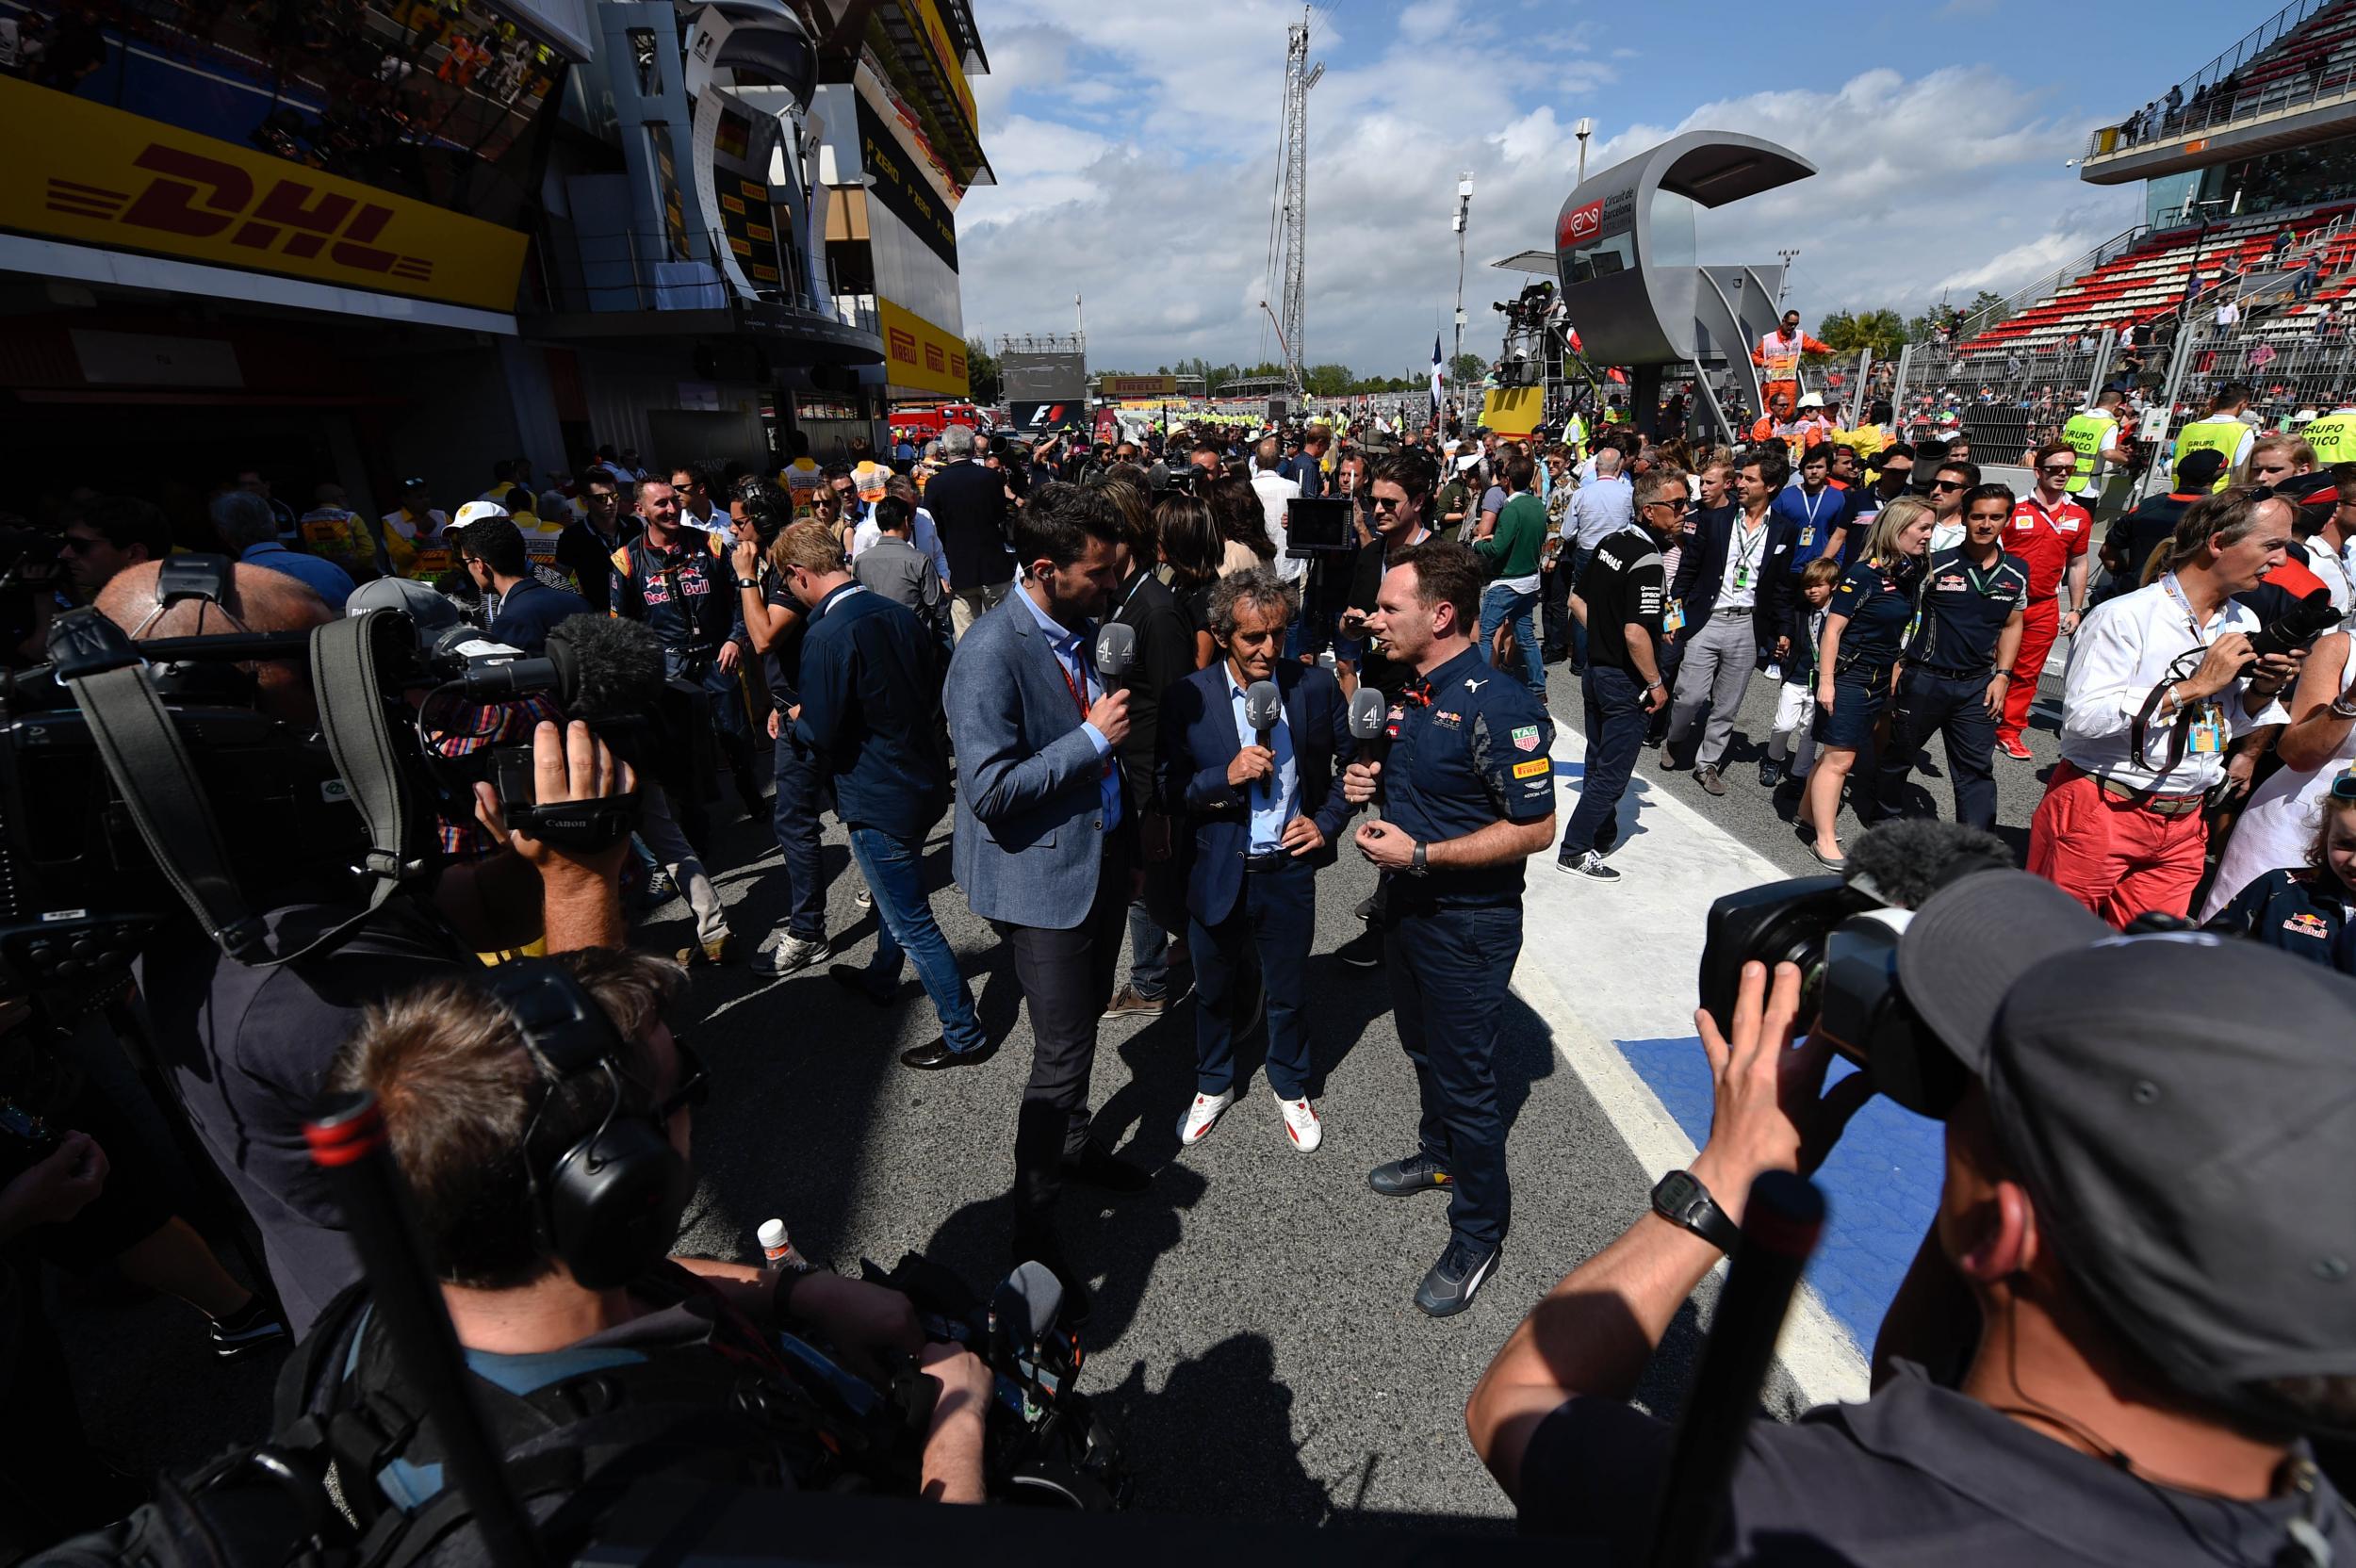 Steve Jones and Alain Prost speak with Red Bull team principal Christian Horner after Max Verstappen's victory